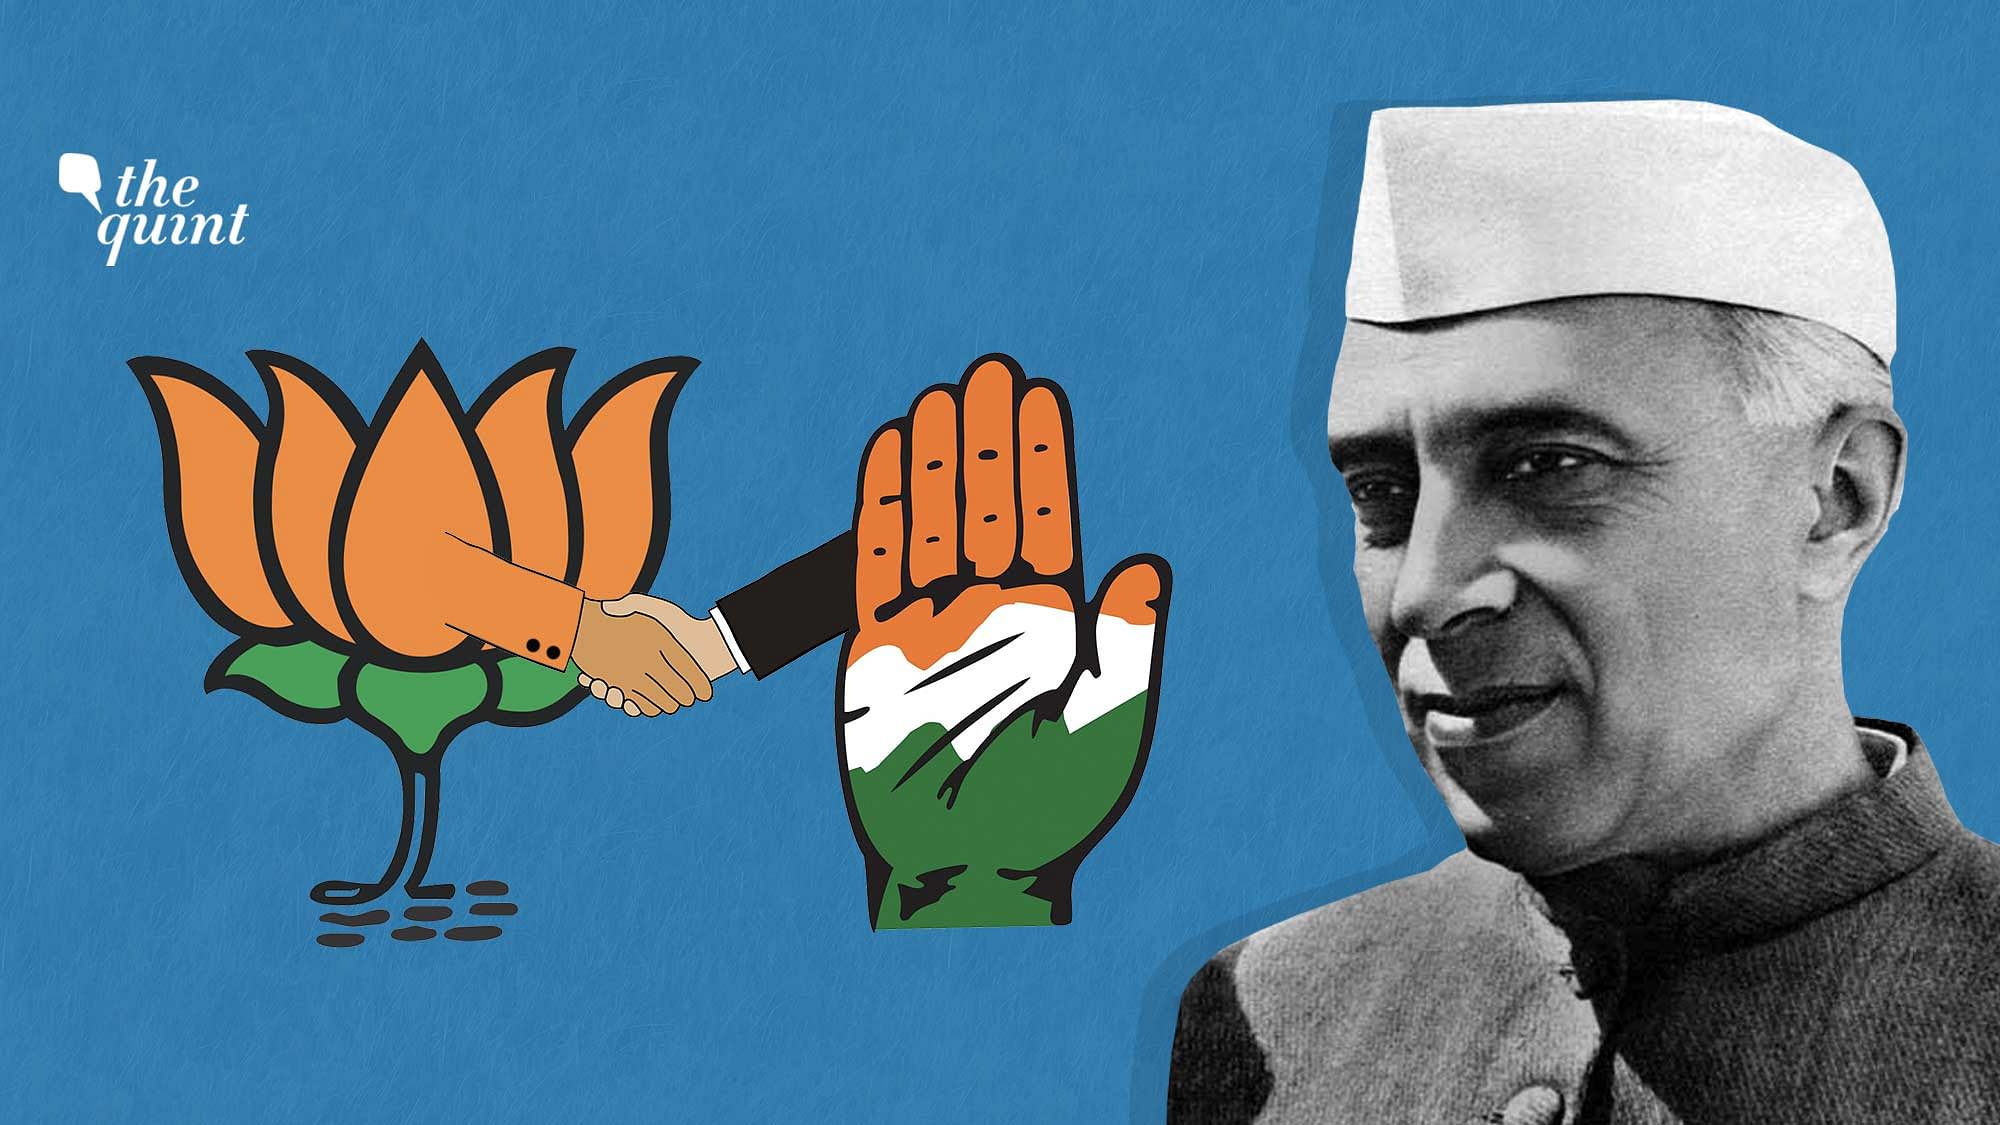 Image of Nehru &amp; BJP &amp; Congress symbols used for representational purposes.